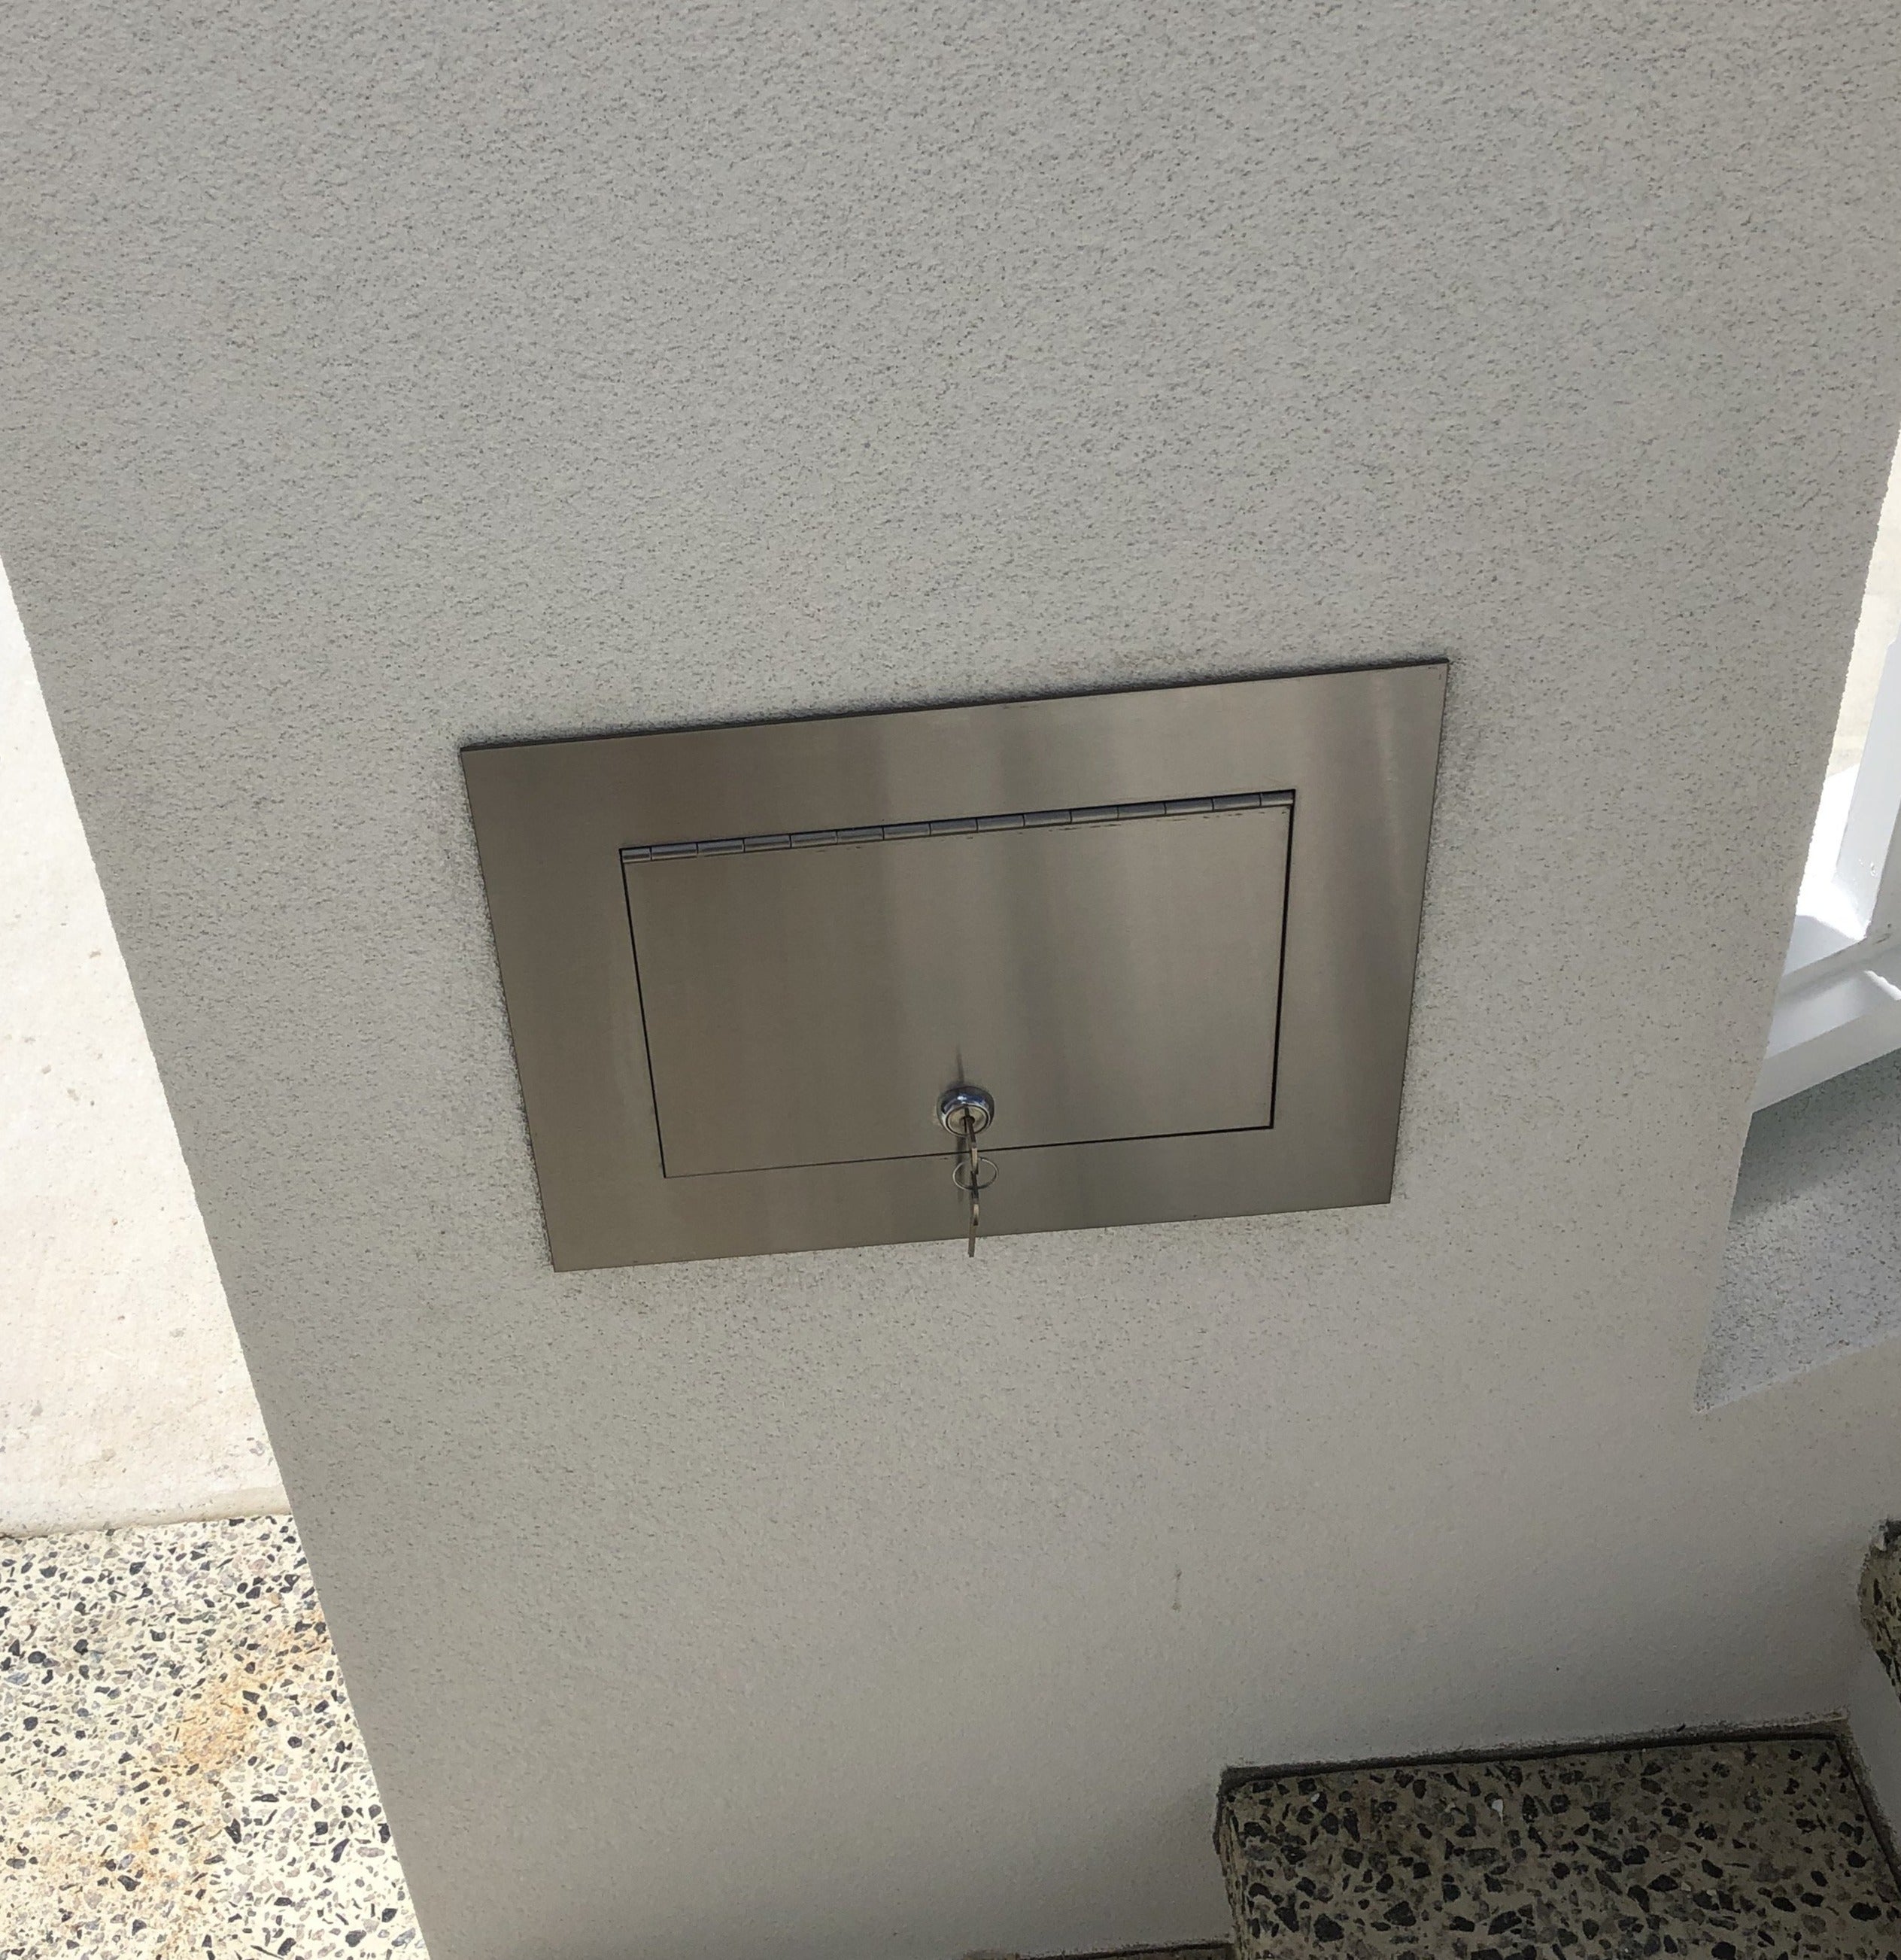 commercial metal door with mail slot